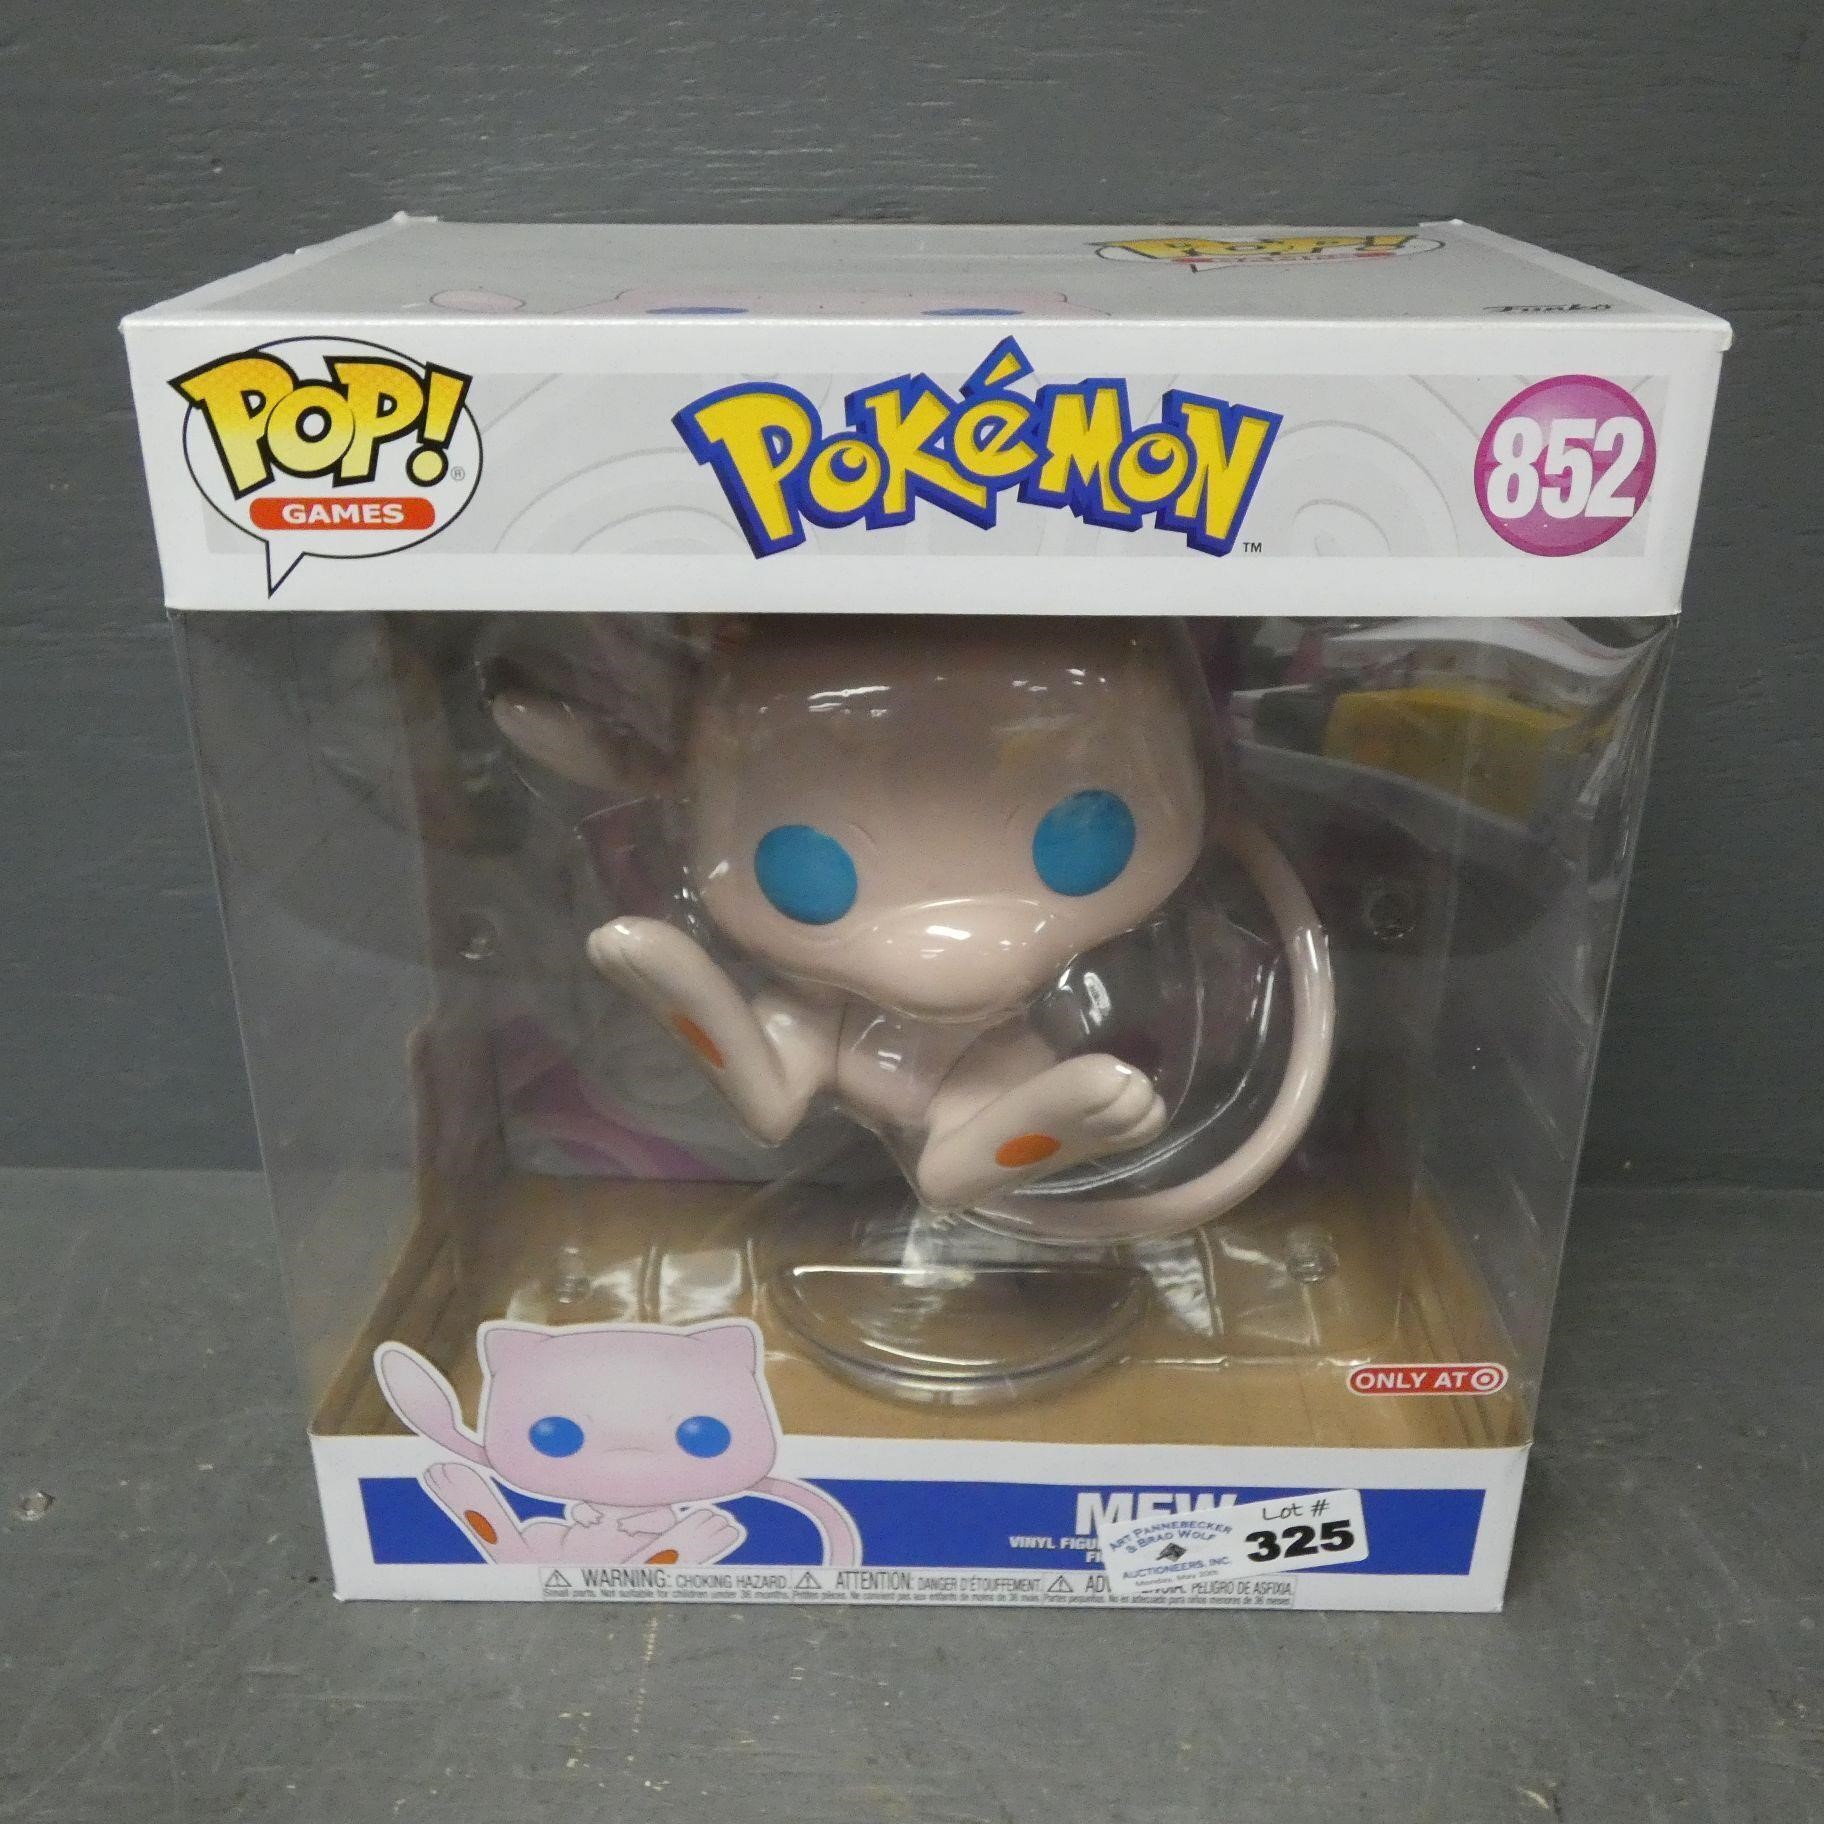 Pop! Games Pokemon Mew #852 Figure